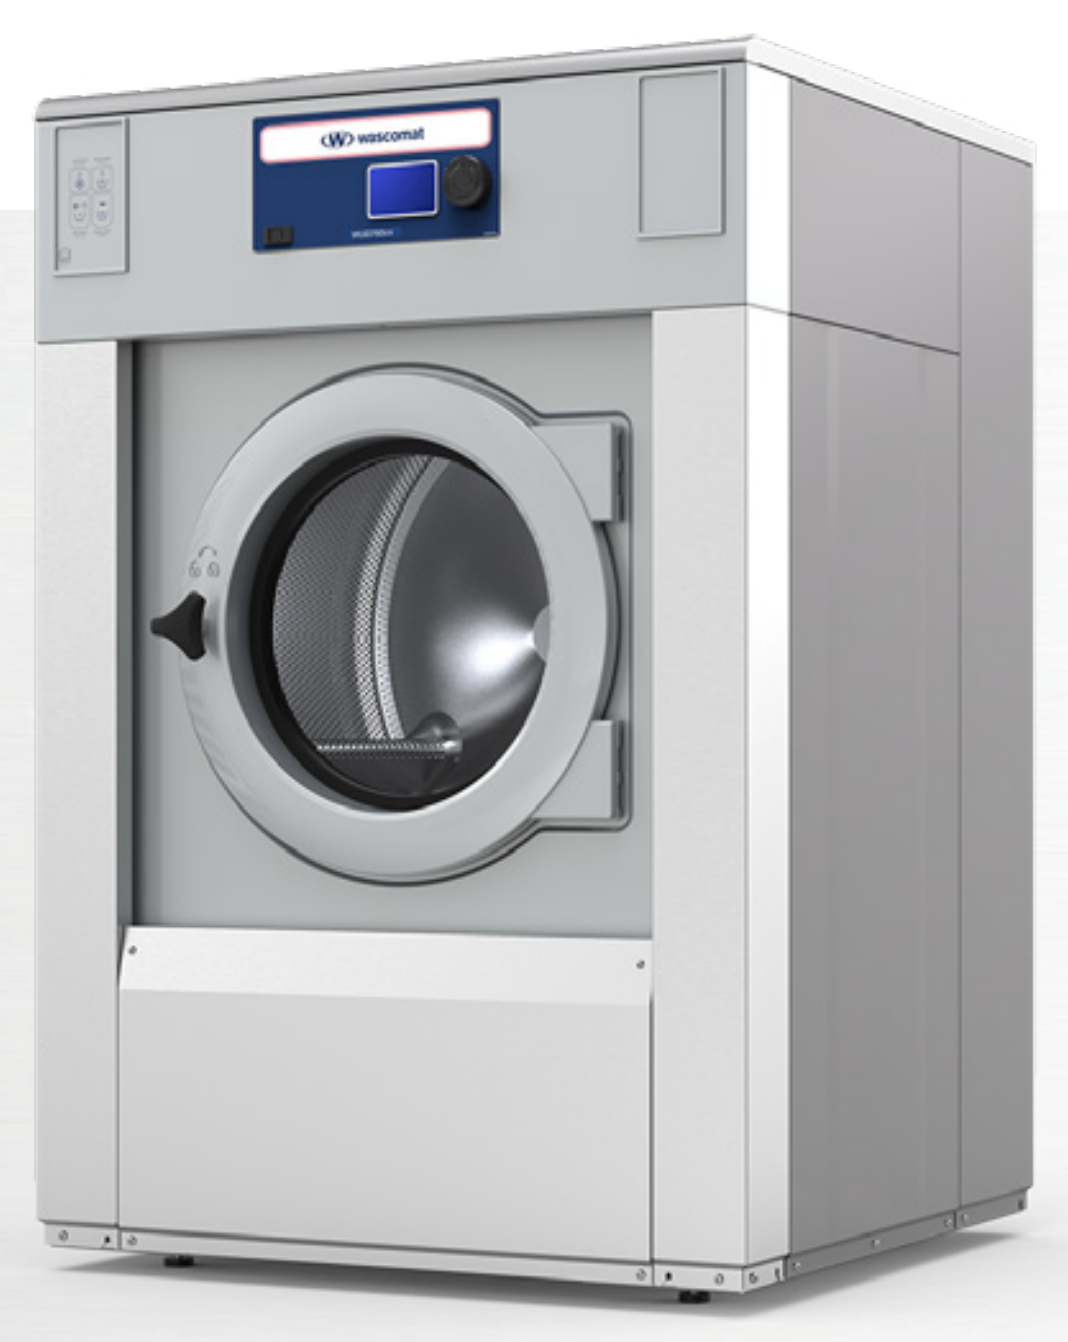 New 2022 Wascomat Wud725 Opl - Automatic Laundry Service Of Va, Inc.